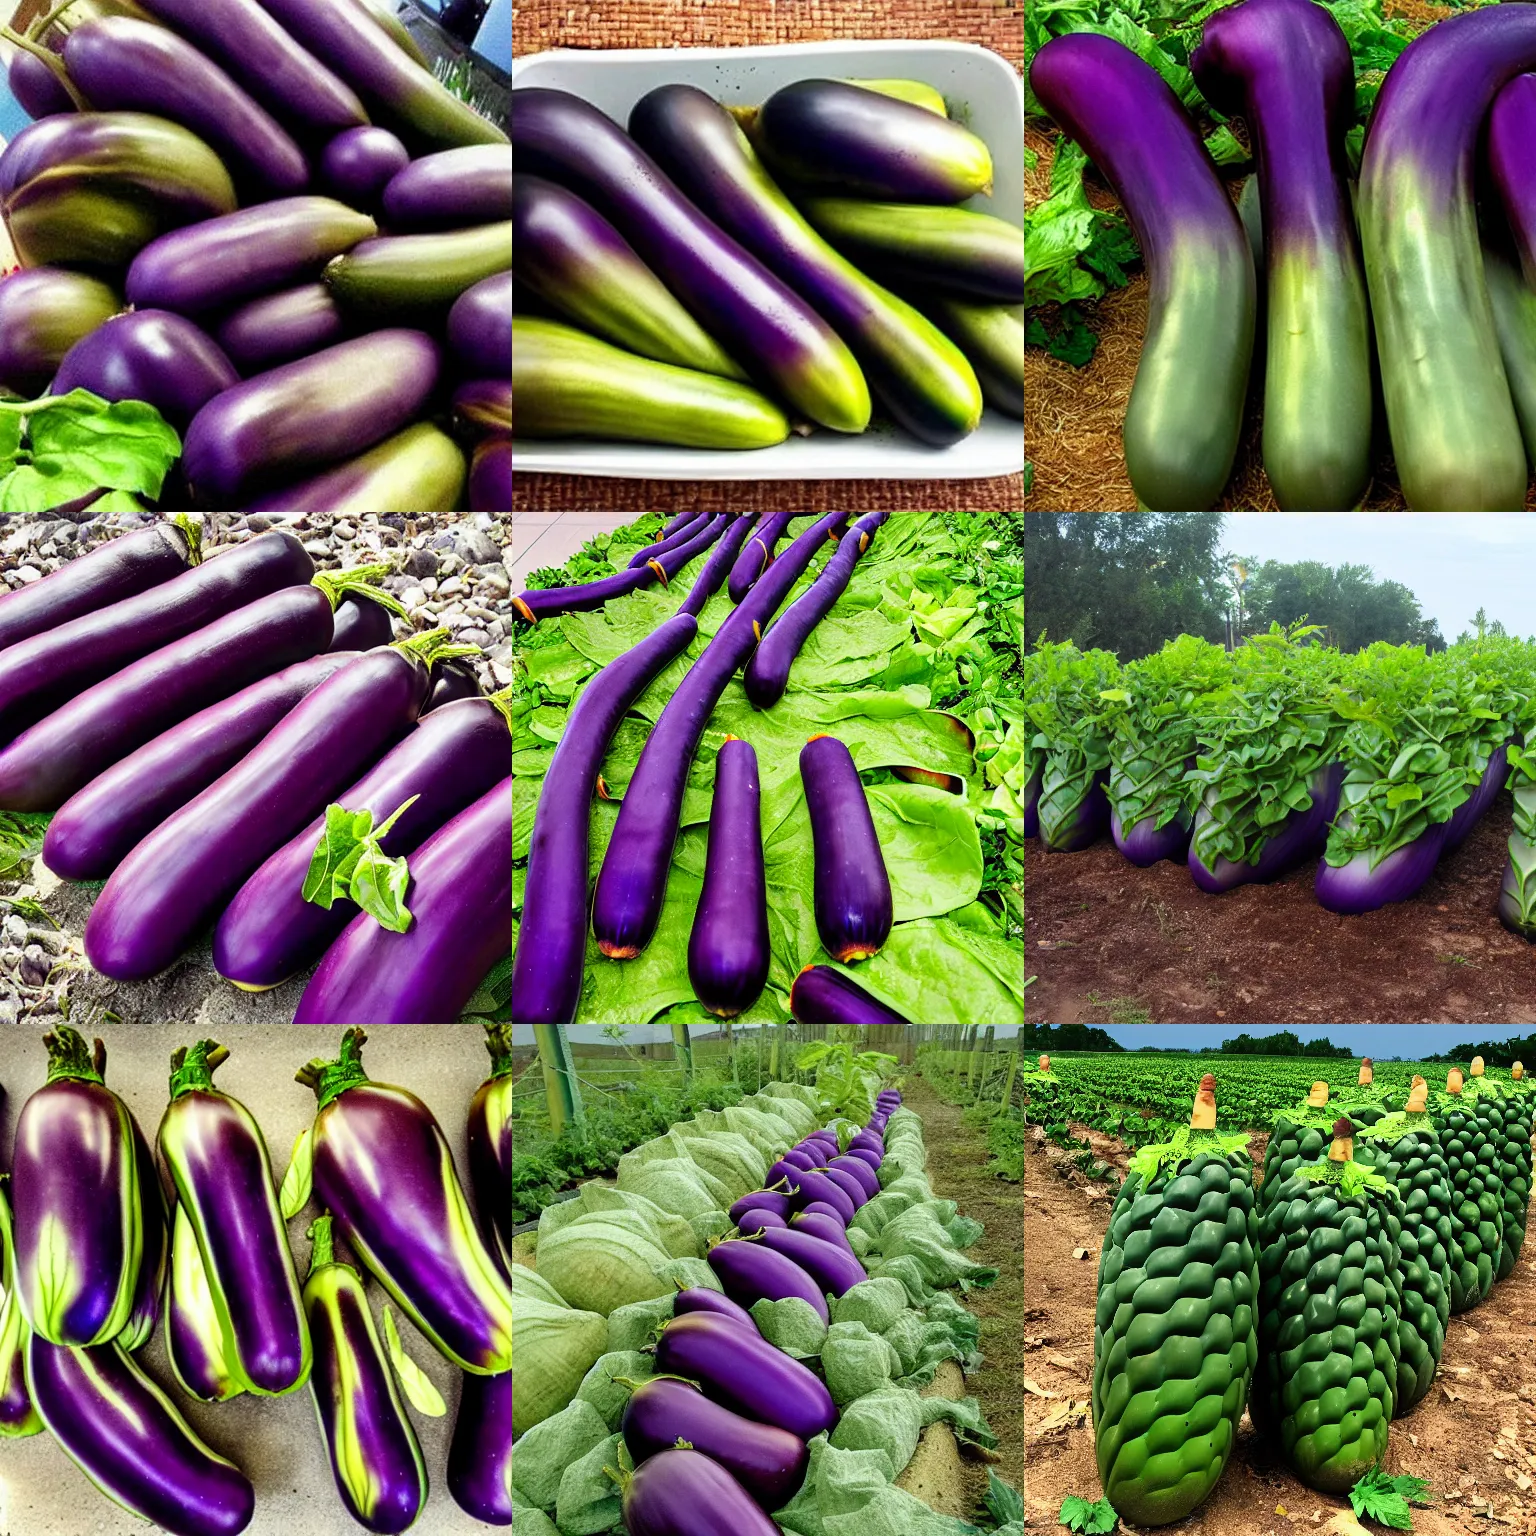 Prompt: tidal wave of eggplants